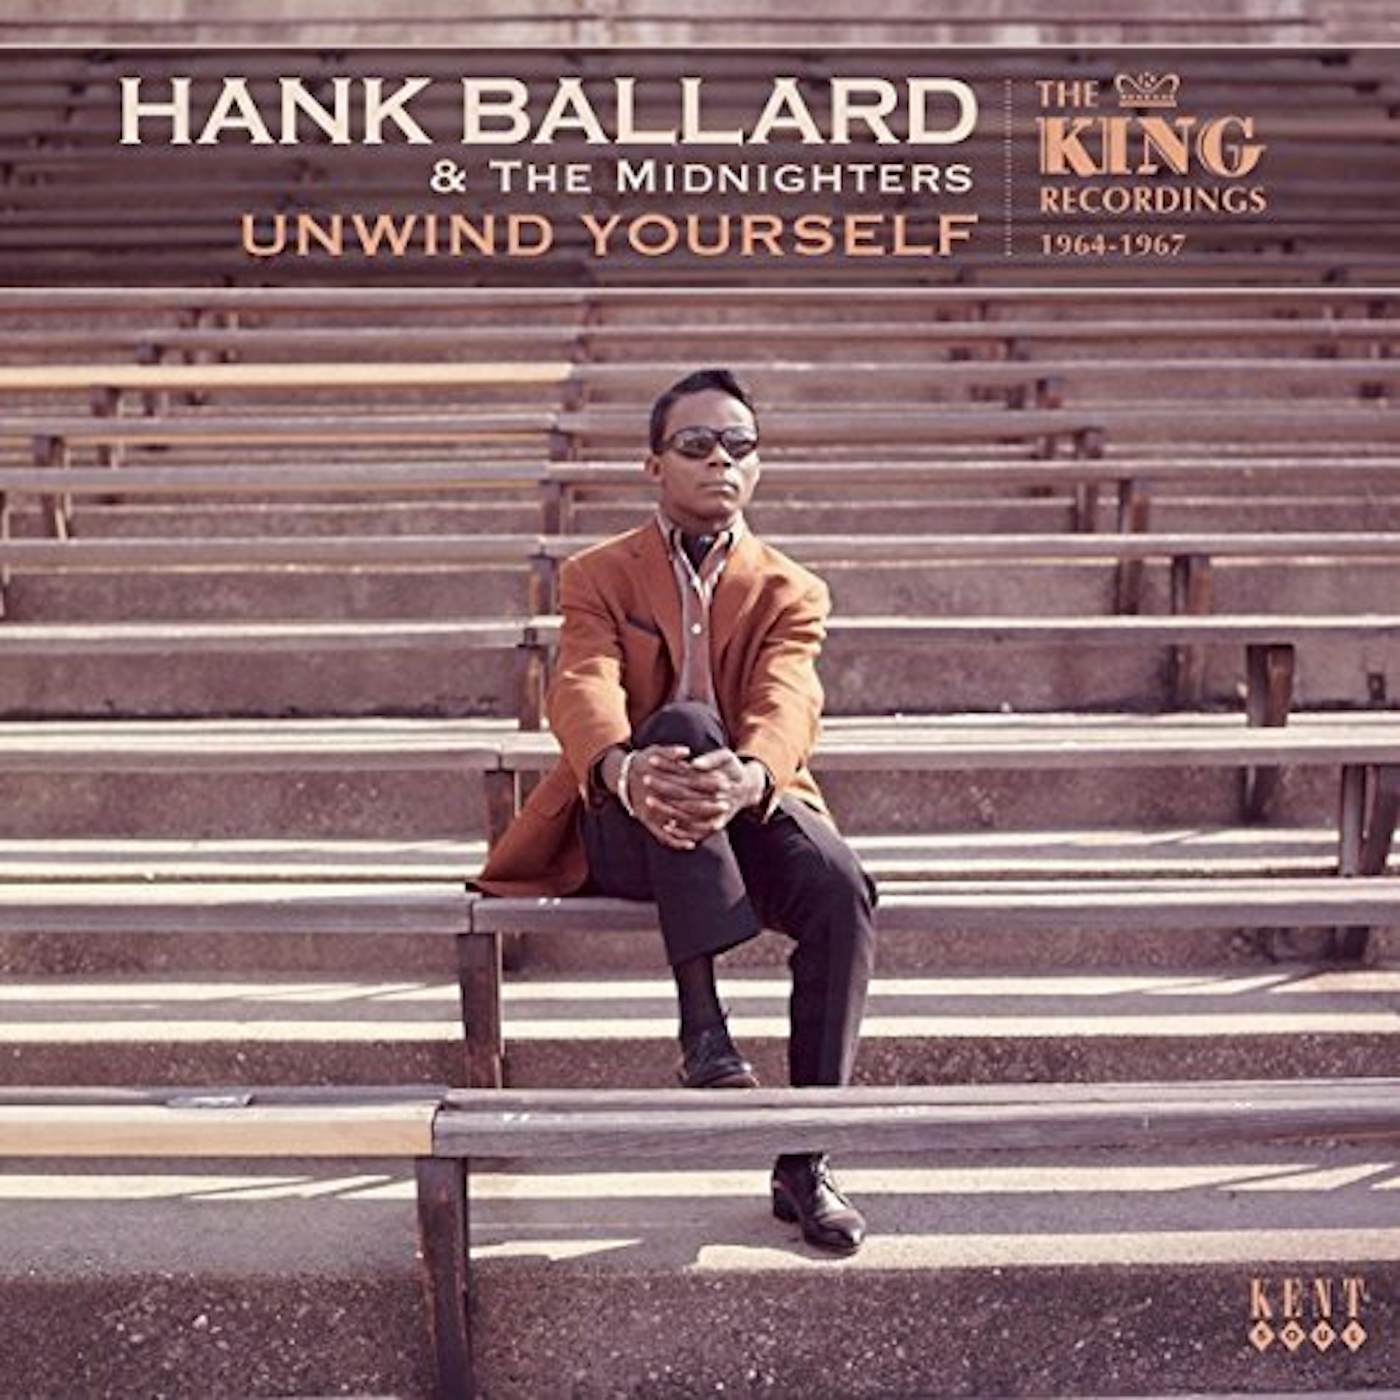 Hank Ballard & The Midnighters UNWIND YOURSELF: KING RECORDINGS 1964-1967 CD